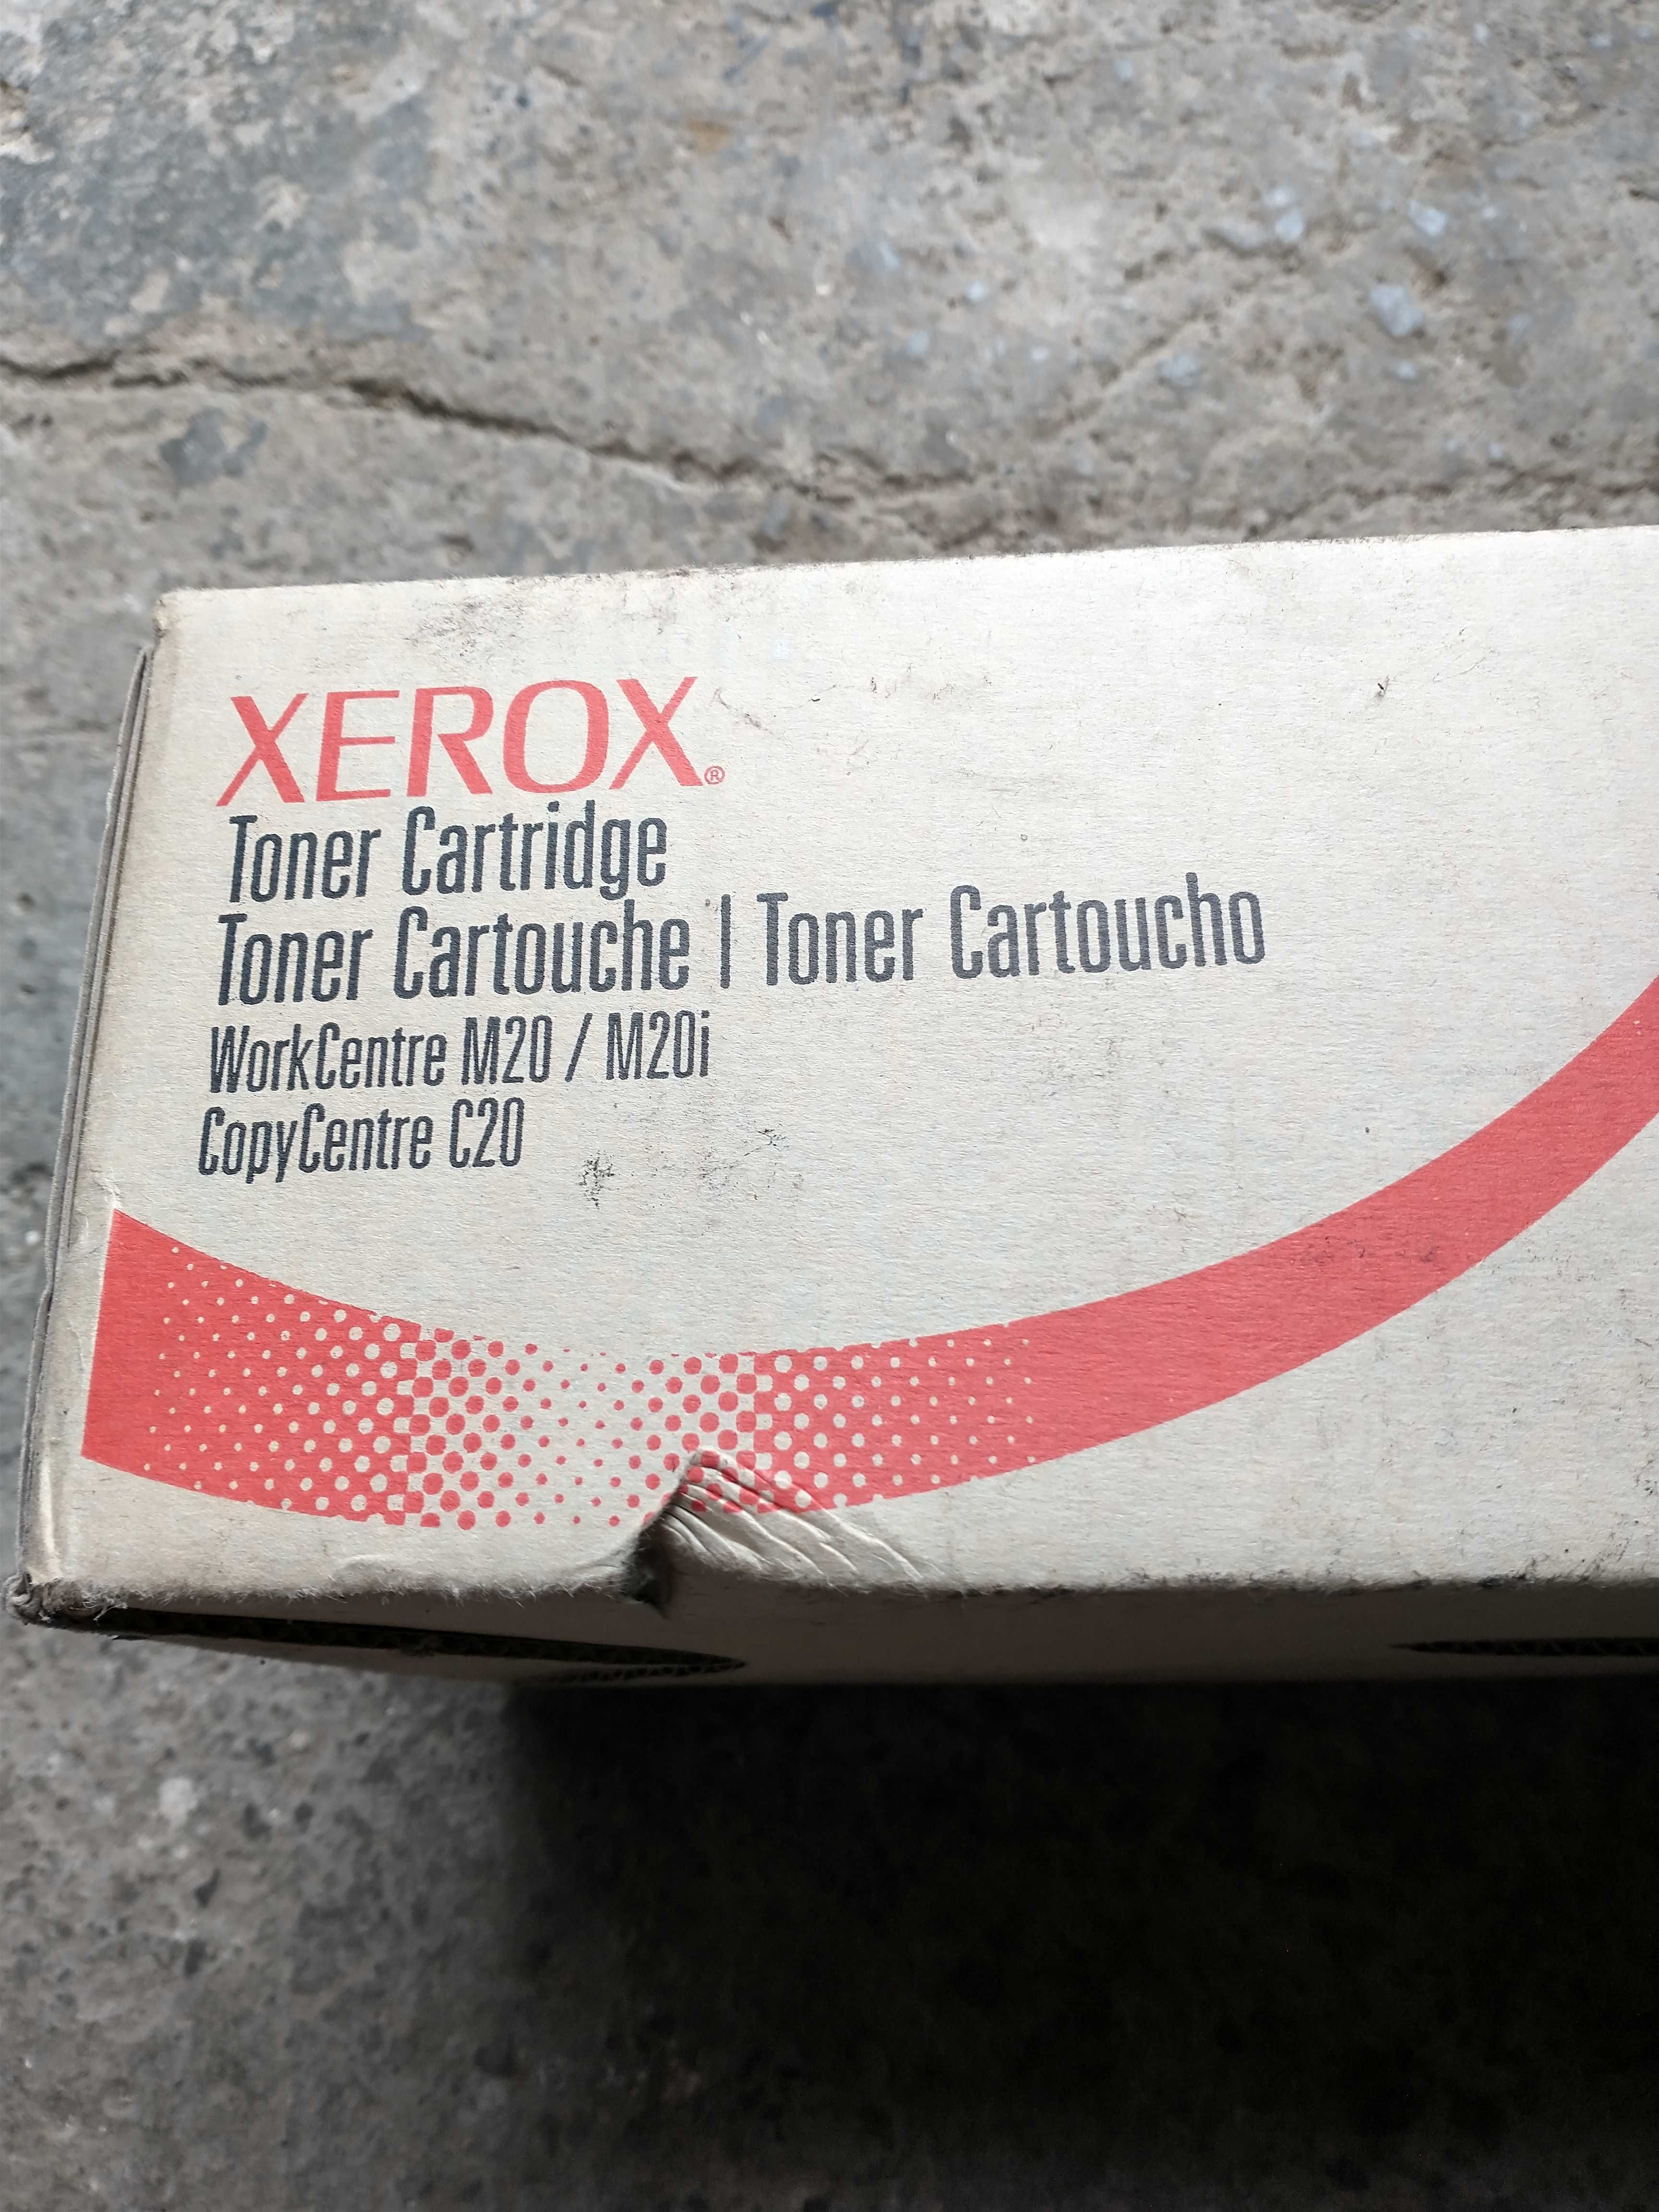 toner cartridge xerox